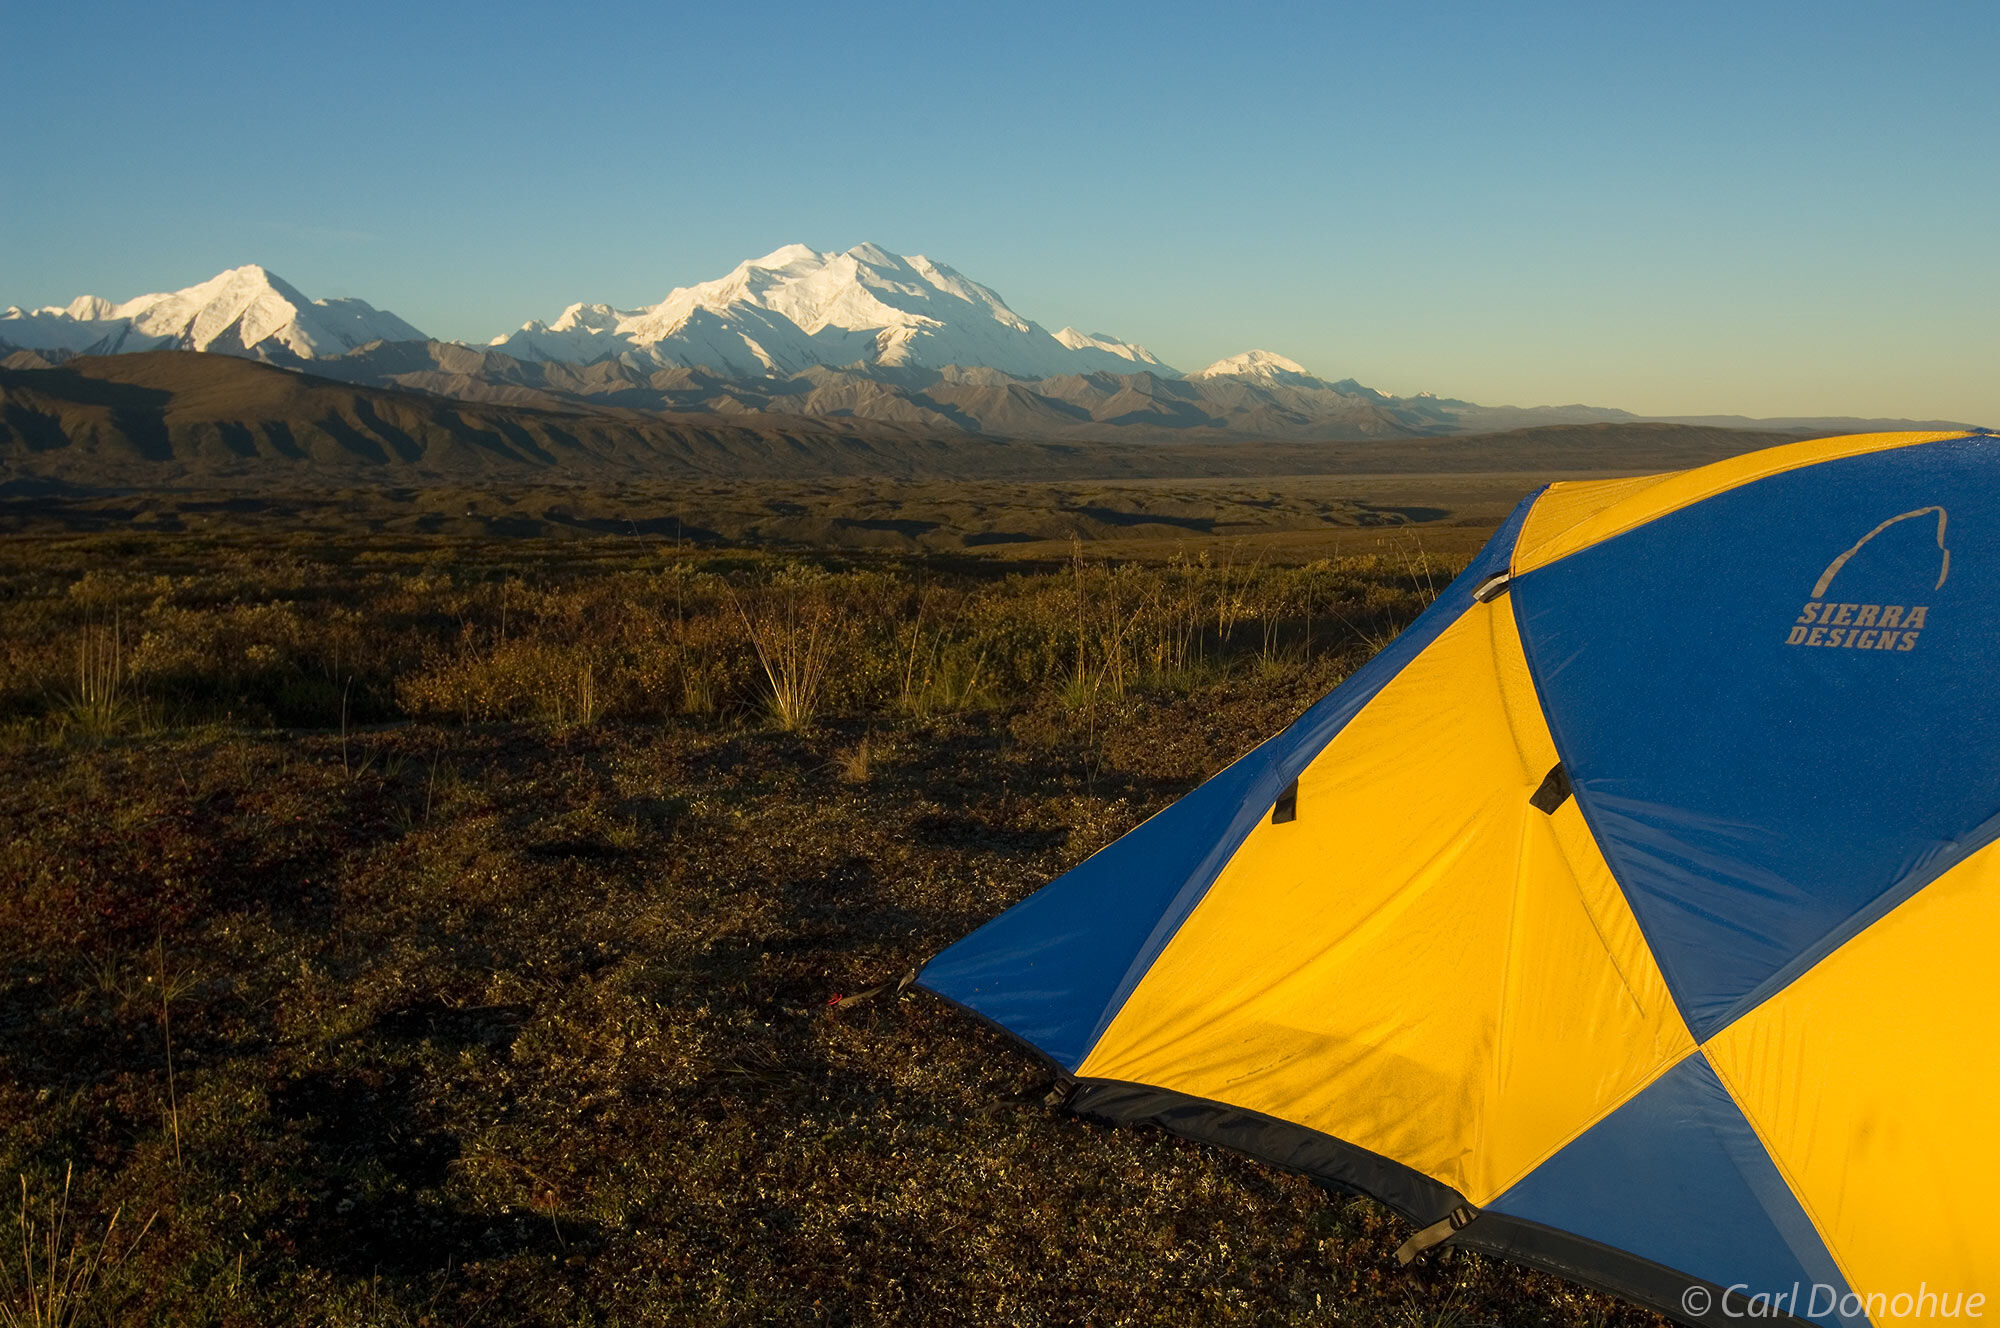 Sierar Designs Astra Tent, fall, dew covered tent, backcountry camping, Mt. McKinley, Denali, Denali National Park, Alaska.